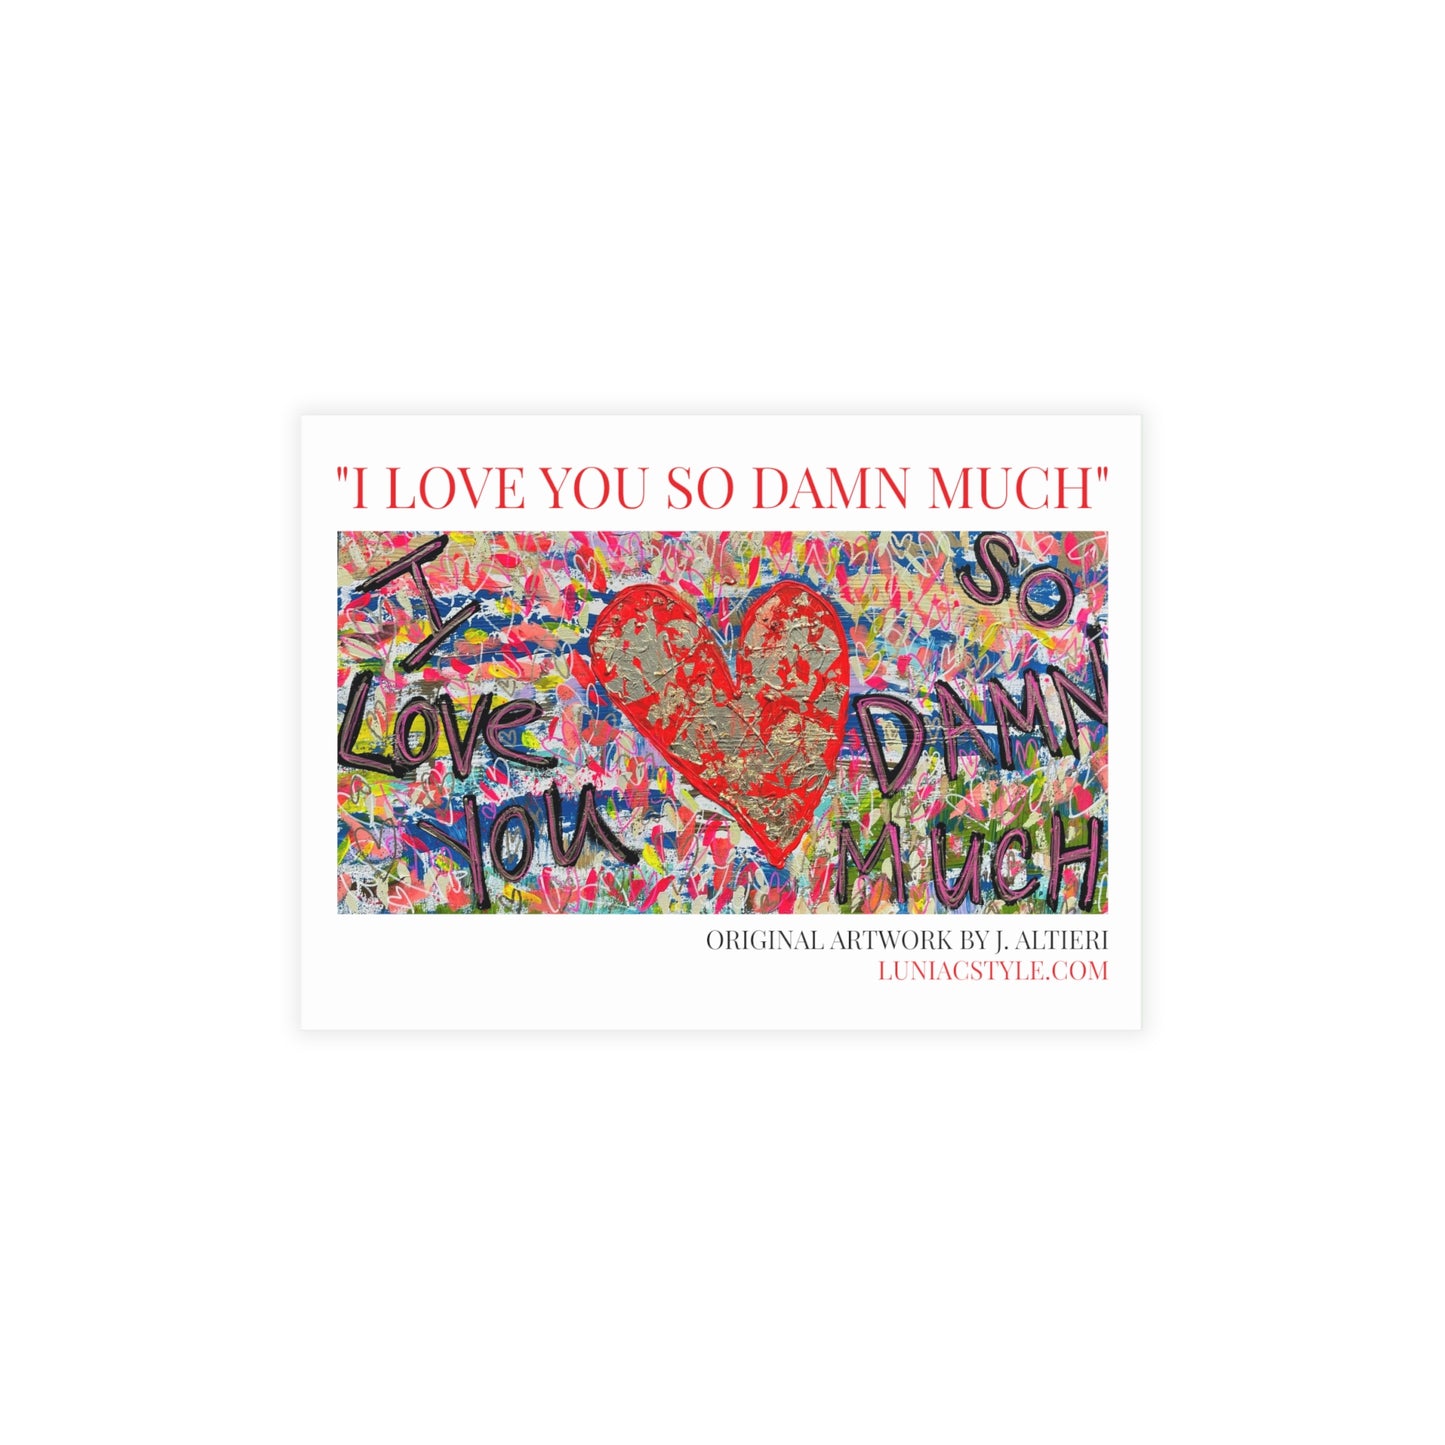 "I LOVE YOU SO DAMN MUCH" Postcard Bundle (envelopes included)